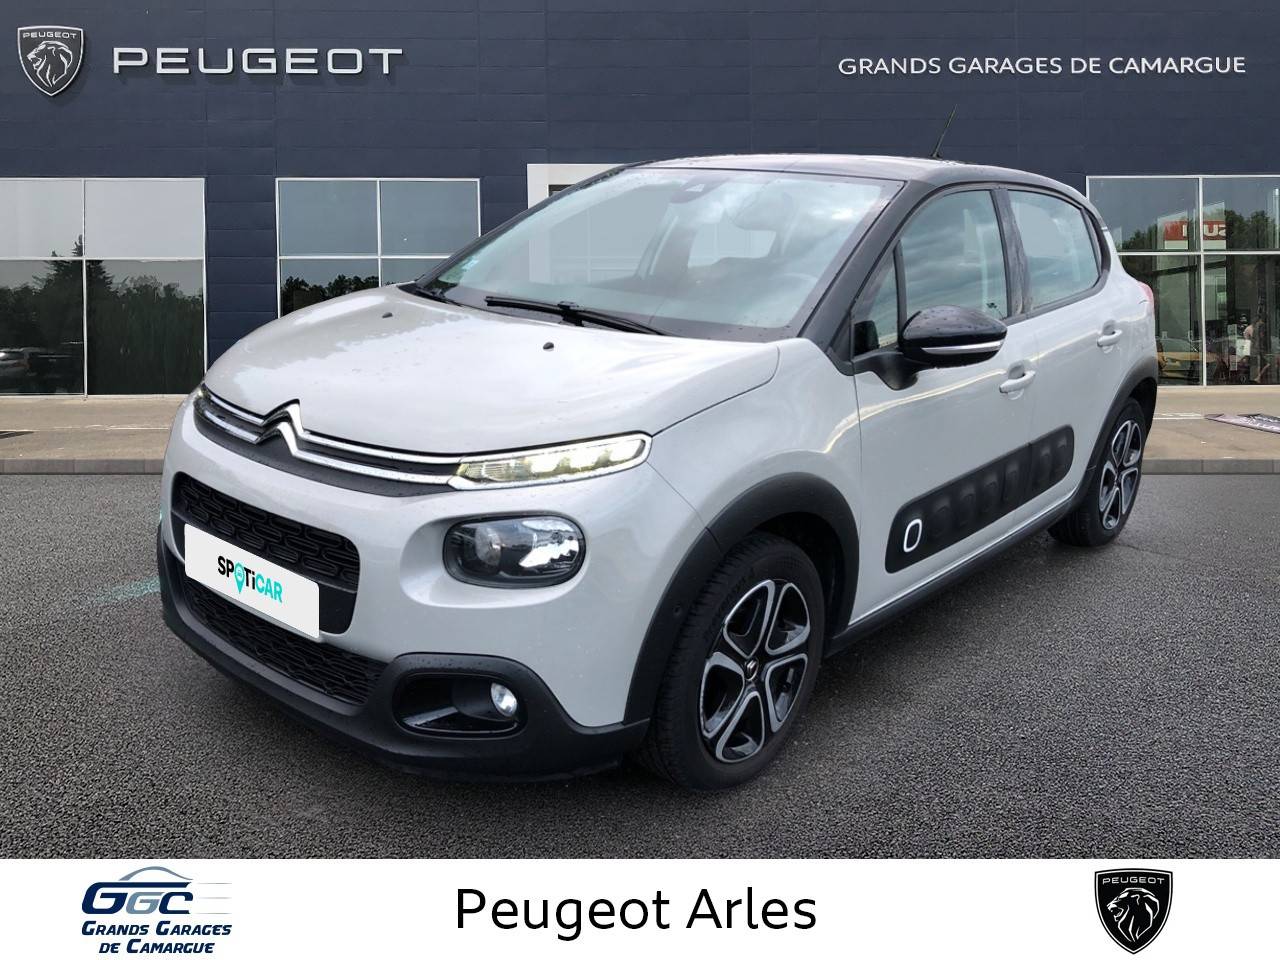 CITROEN C3 | C3 PureTech 110 S&S occasion - Peugeot Arles